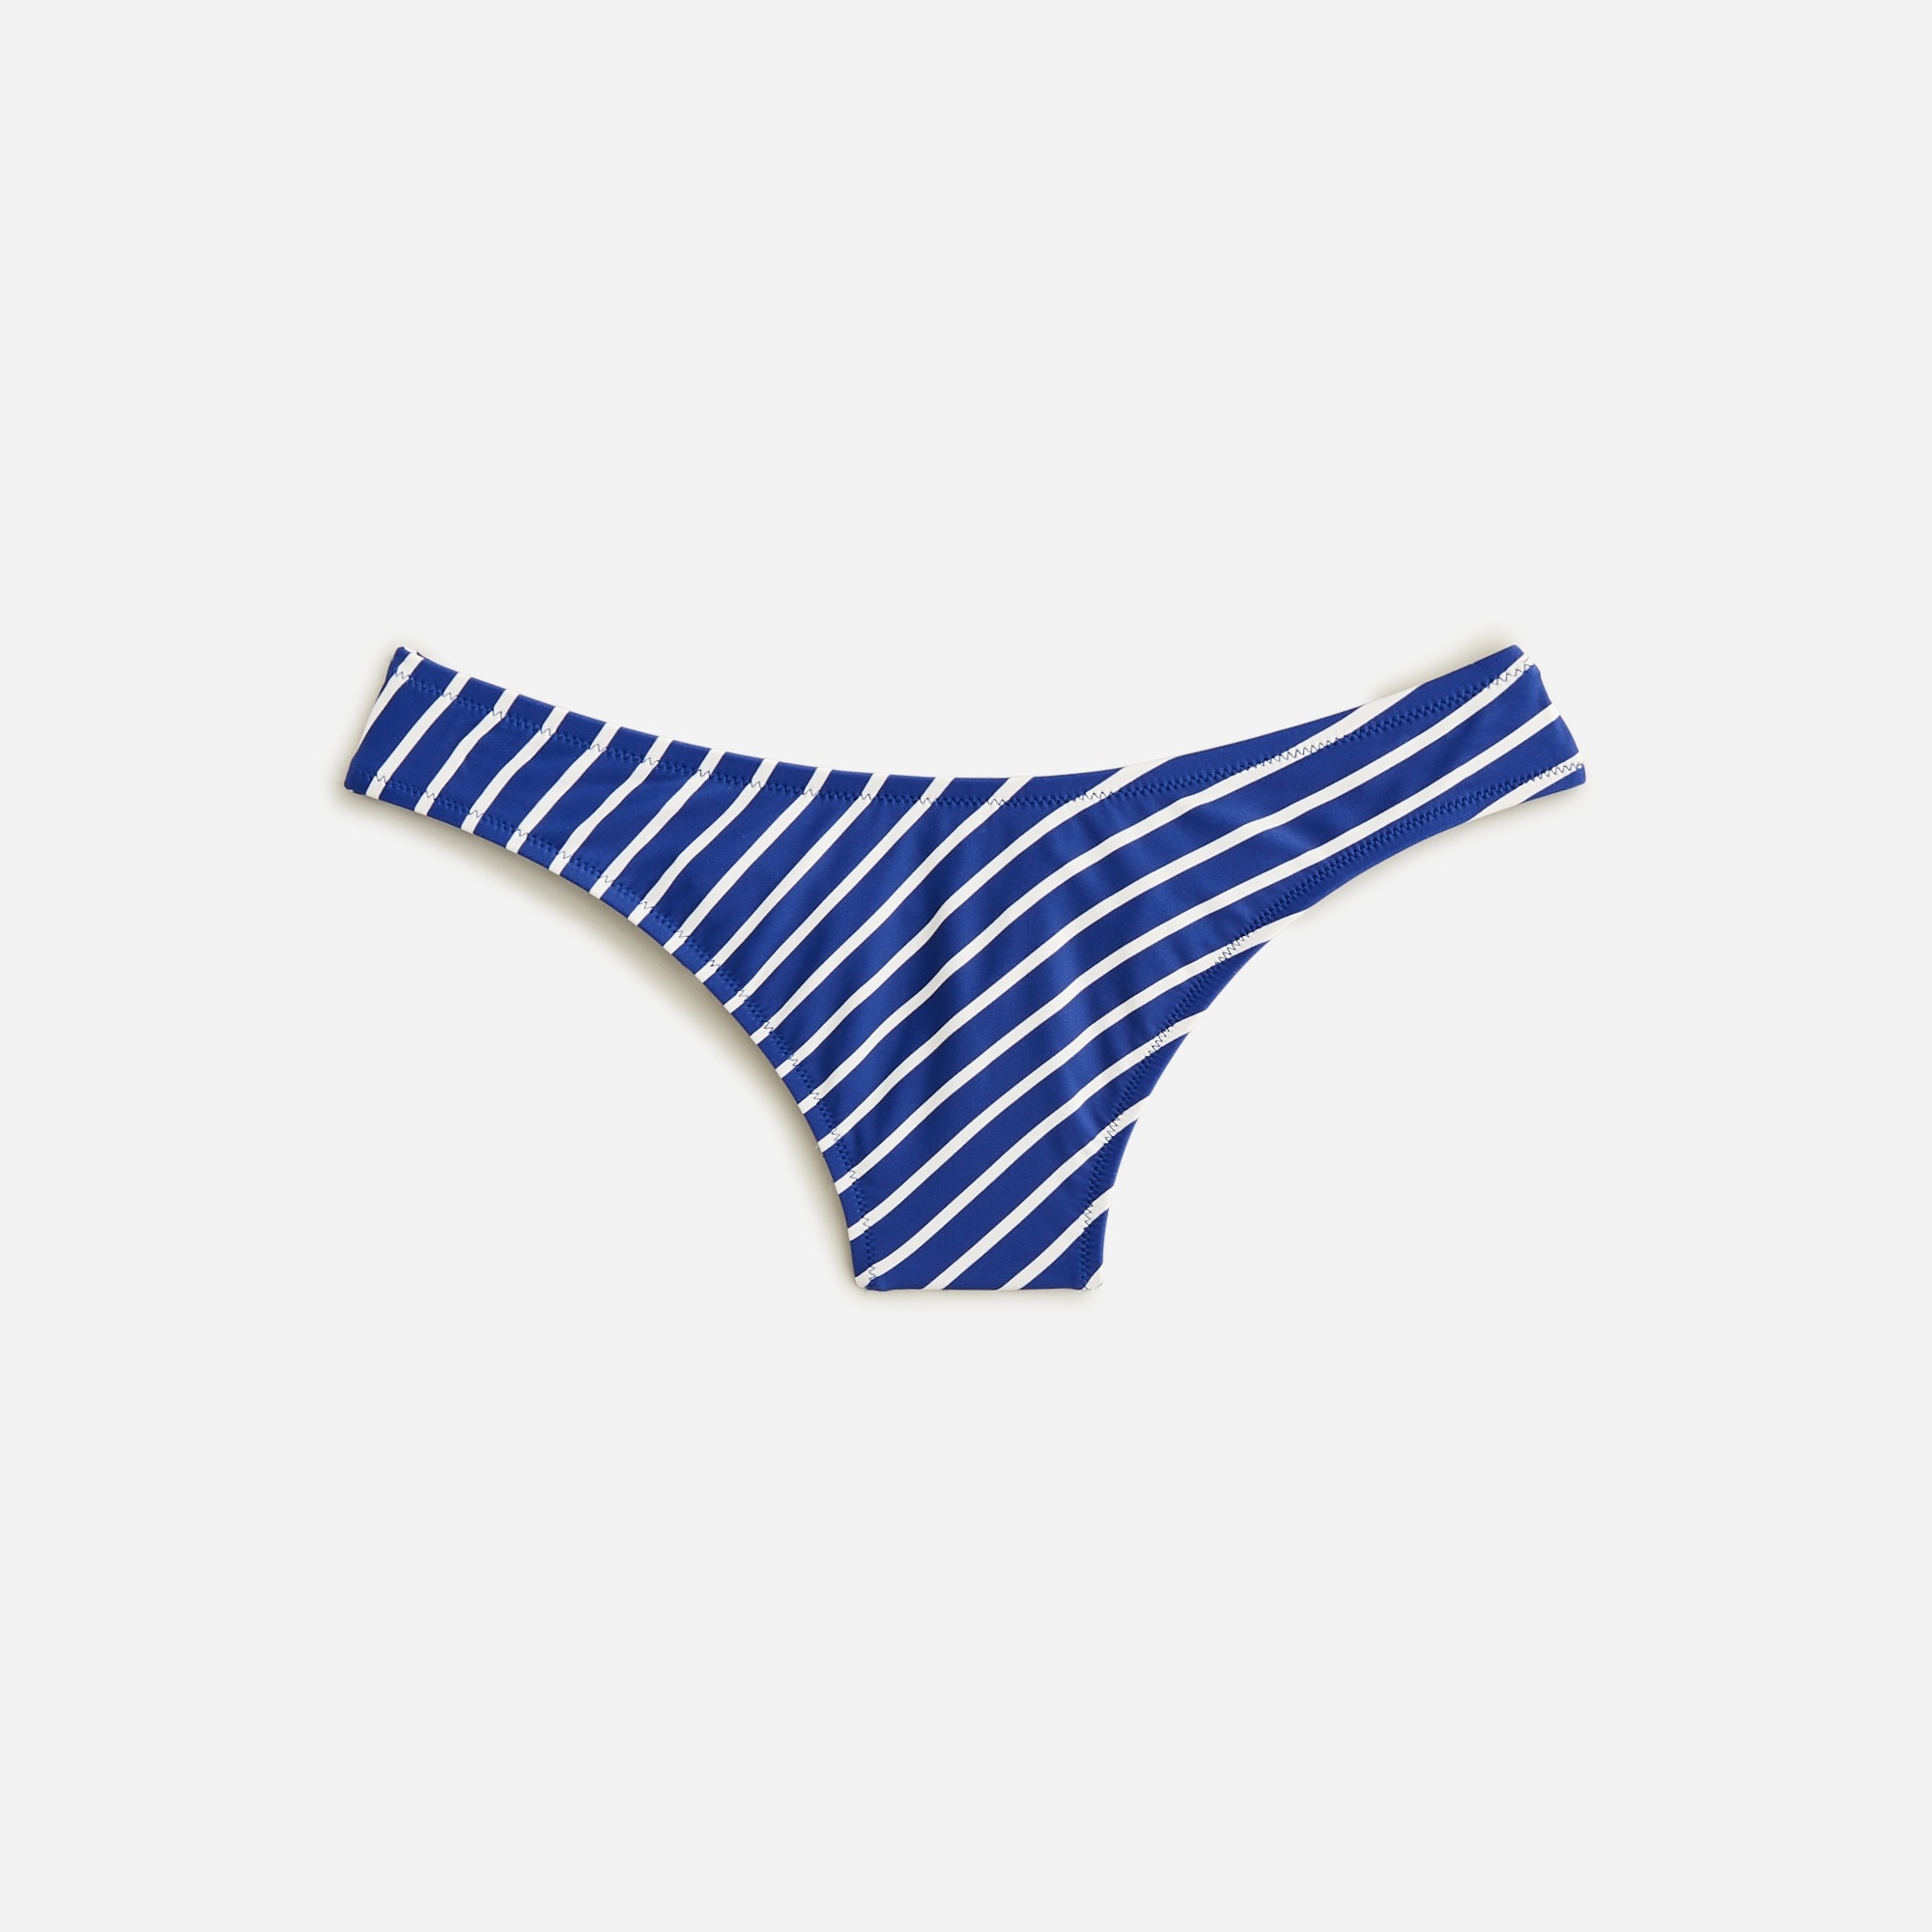  '90s high-leg bikini bottom in stripe